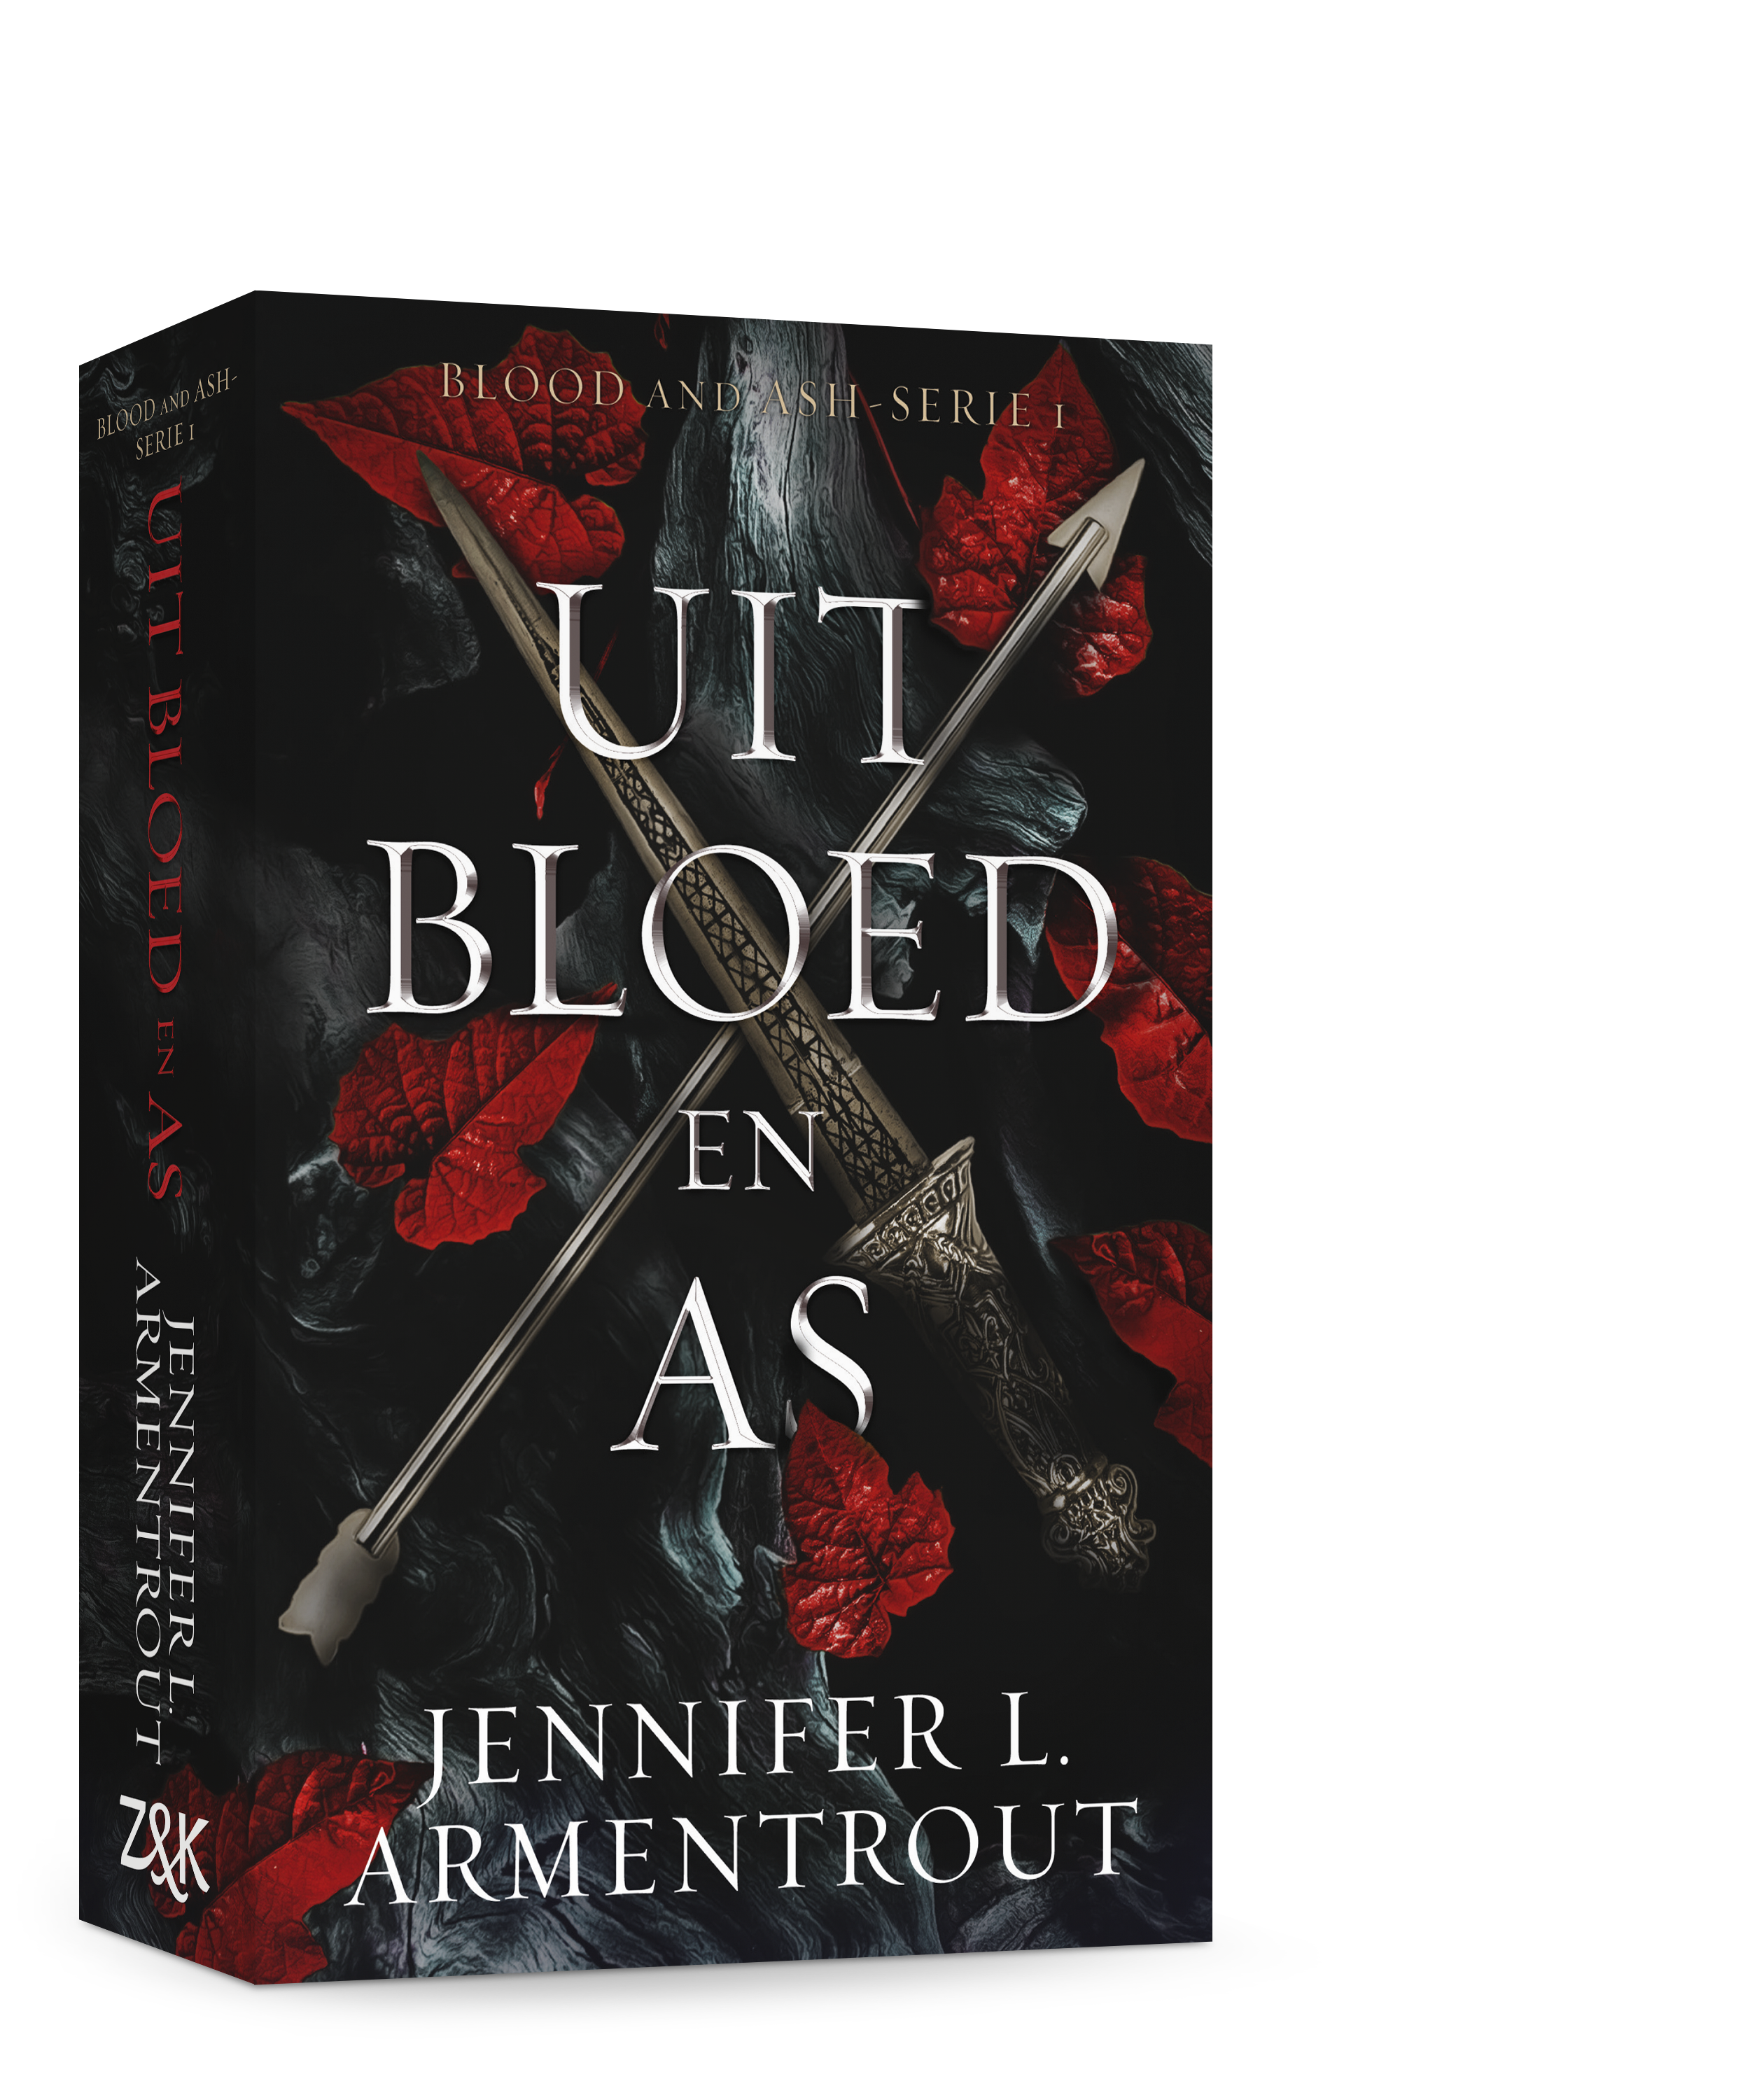 uit bloed en as, jennifer armentrout', blood and ash serie